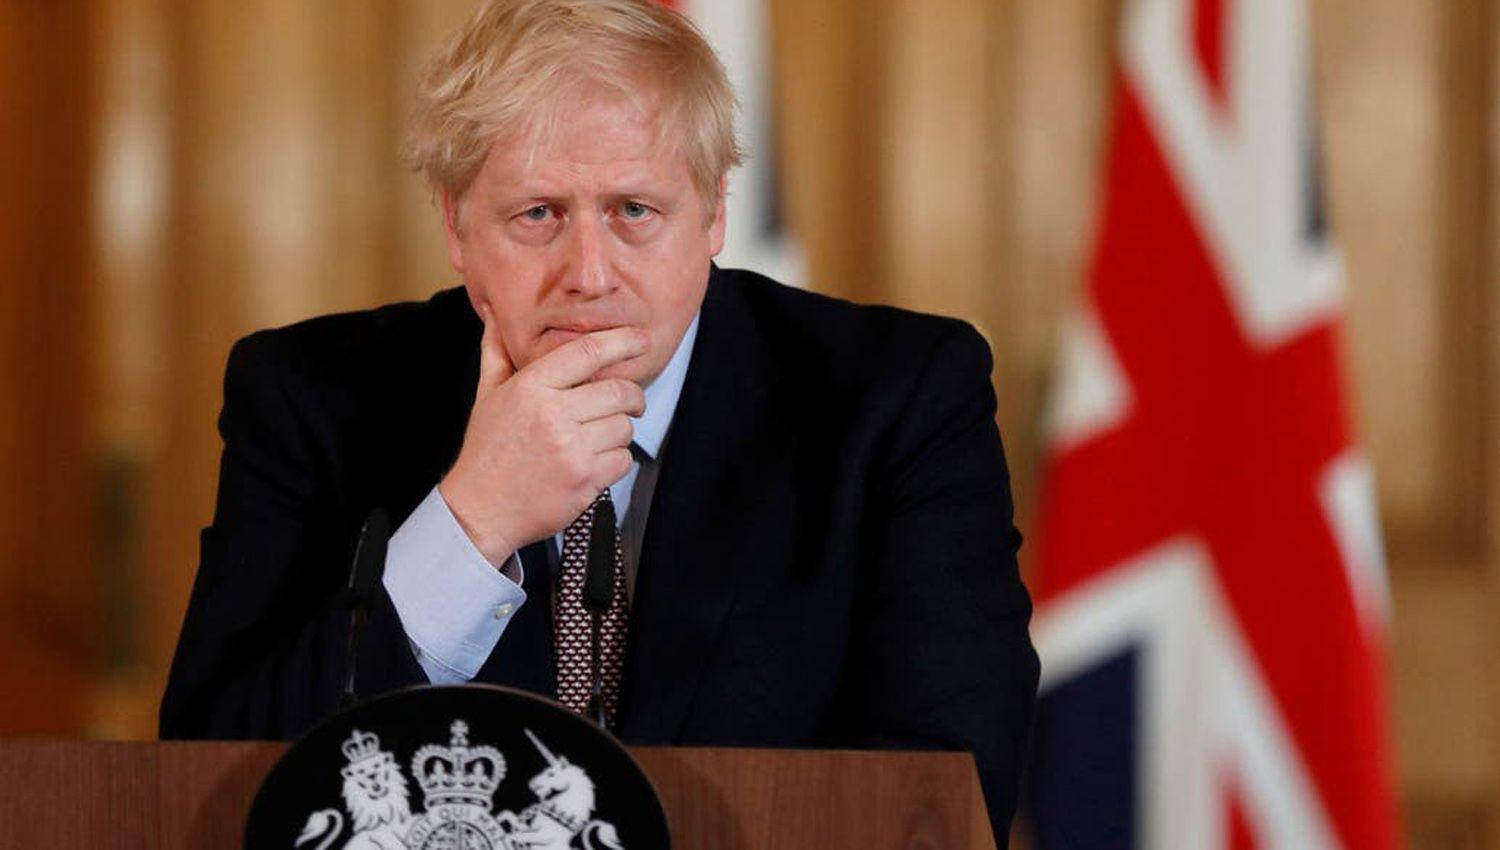 Boris Johnson afirma que la variante britaacutenica parece ldquoser maacutes mortiacuteferardquo